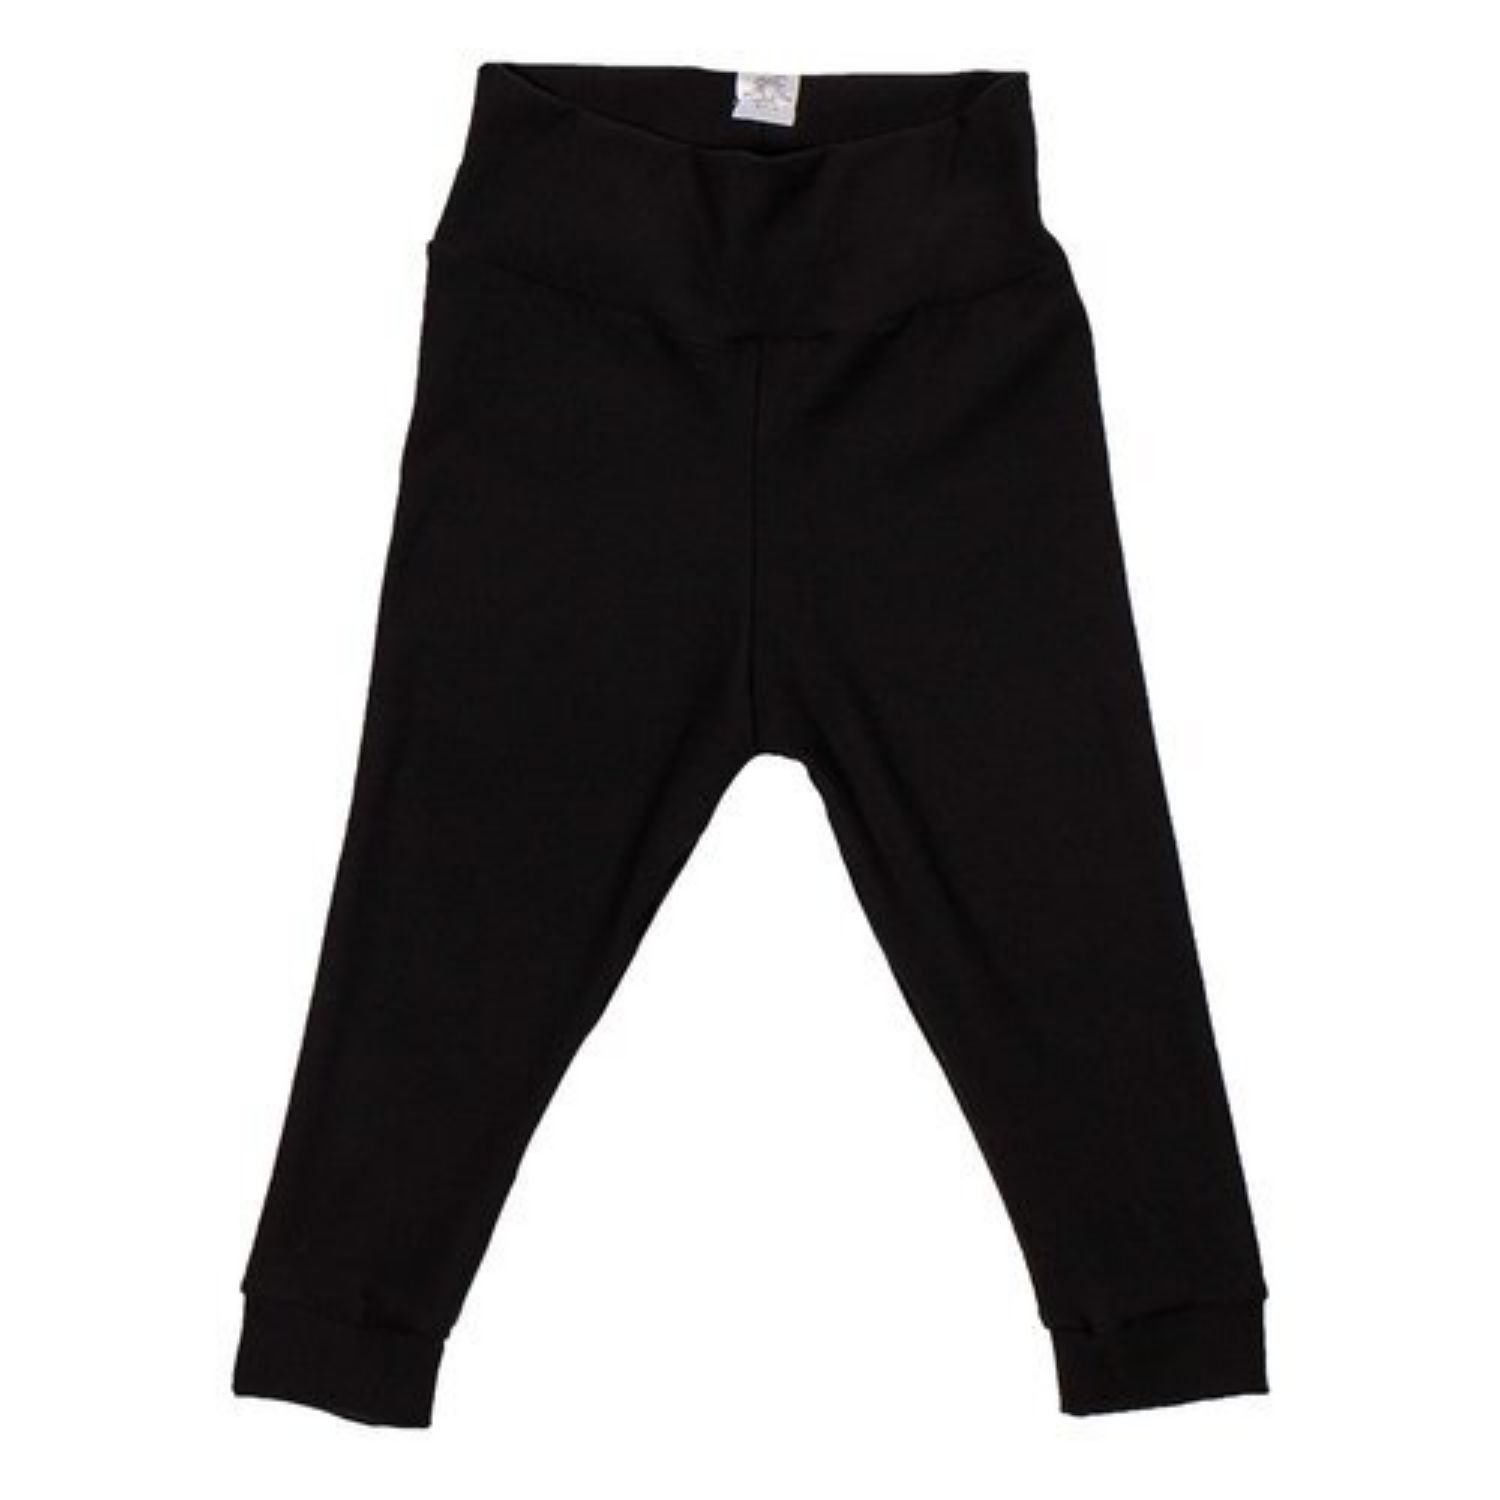 Bumblito Leggings (Size: XL / Pattern: Basic Black) Pattern: Basic Black / Size: XL (110 - 116)